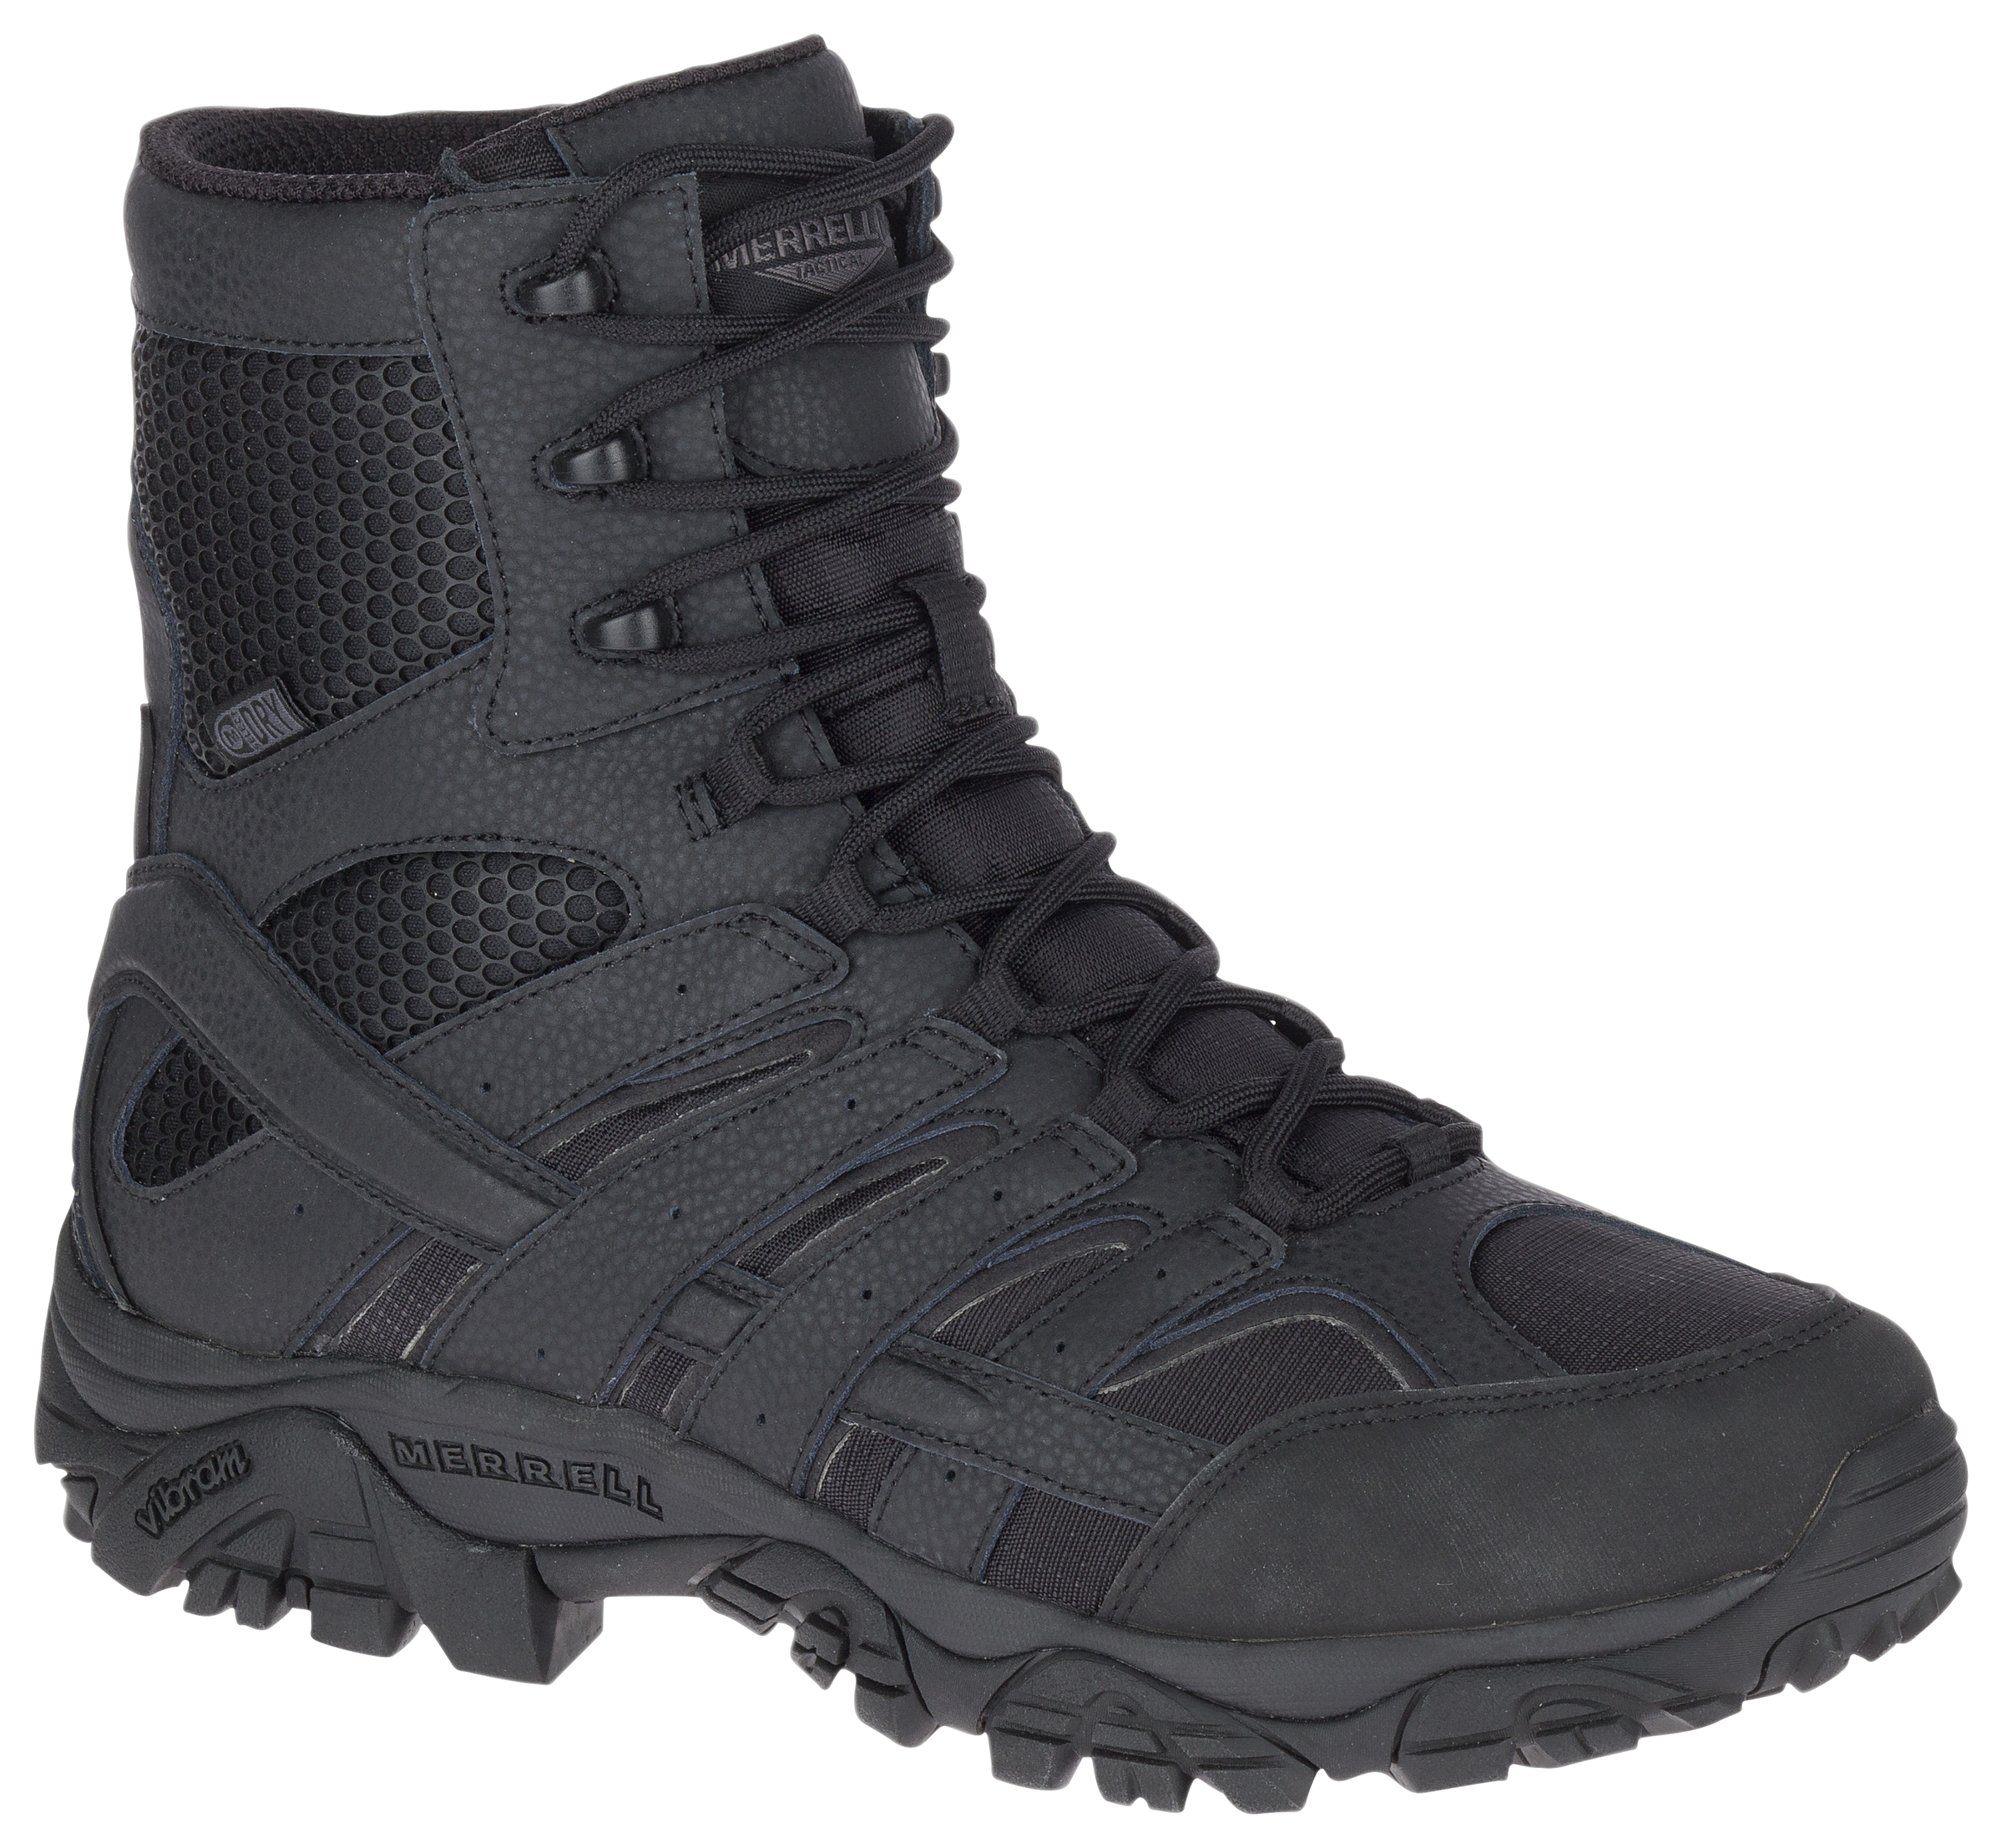 Merrell Moab 2 Waterproof Tactical Boots for Men - Black - 10M